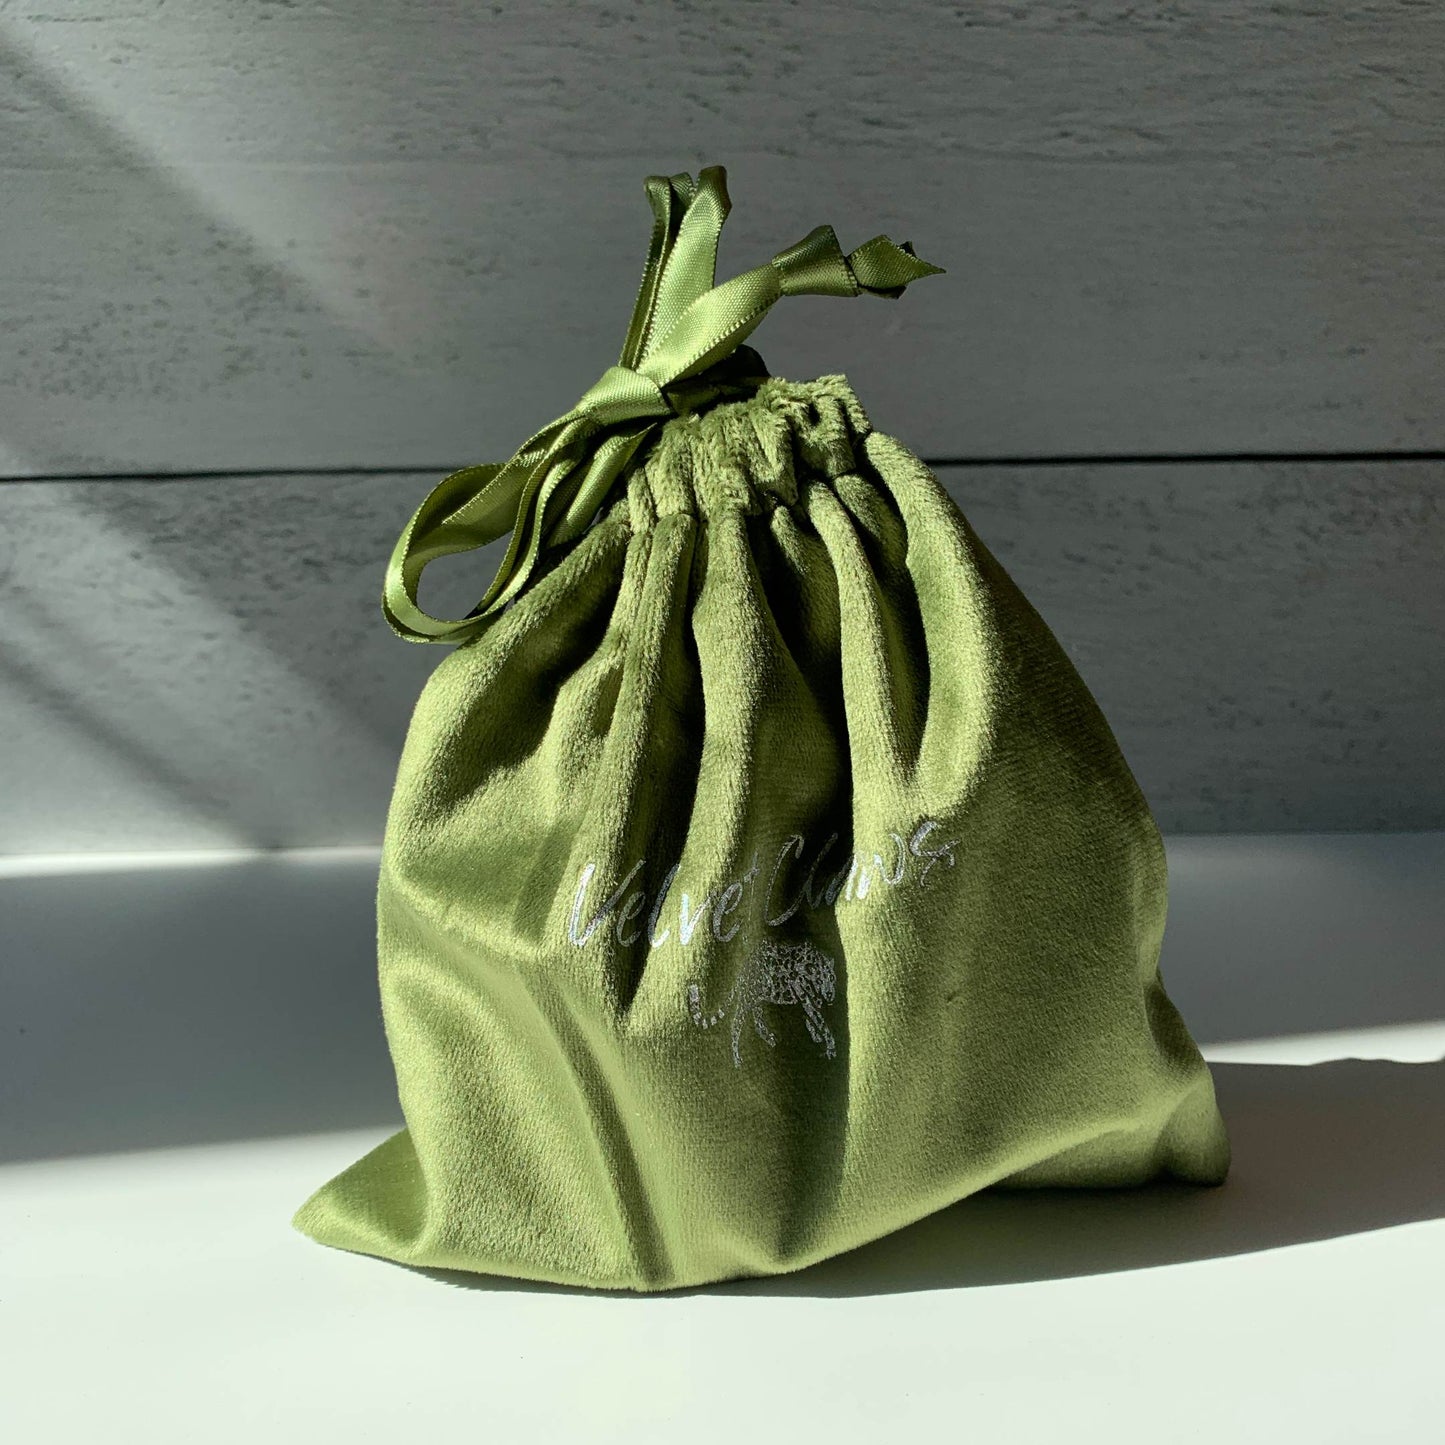 Velvet Claws Hair Clip | Petite Profesh Collection Emerald | Claw Clip in Velvet Travel Bag